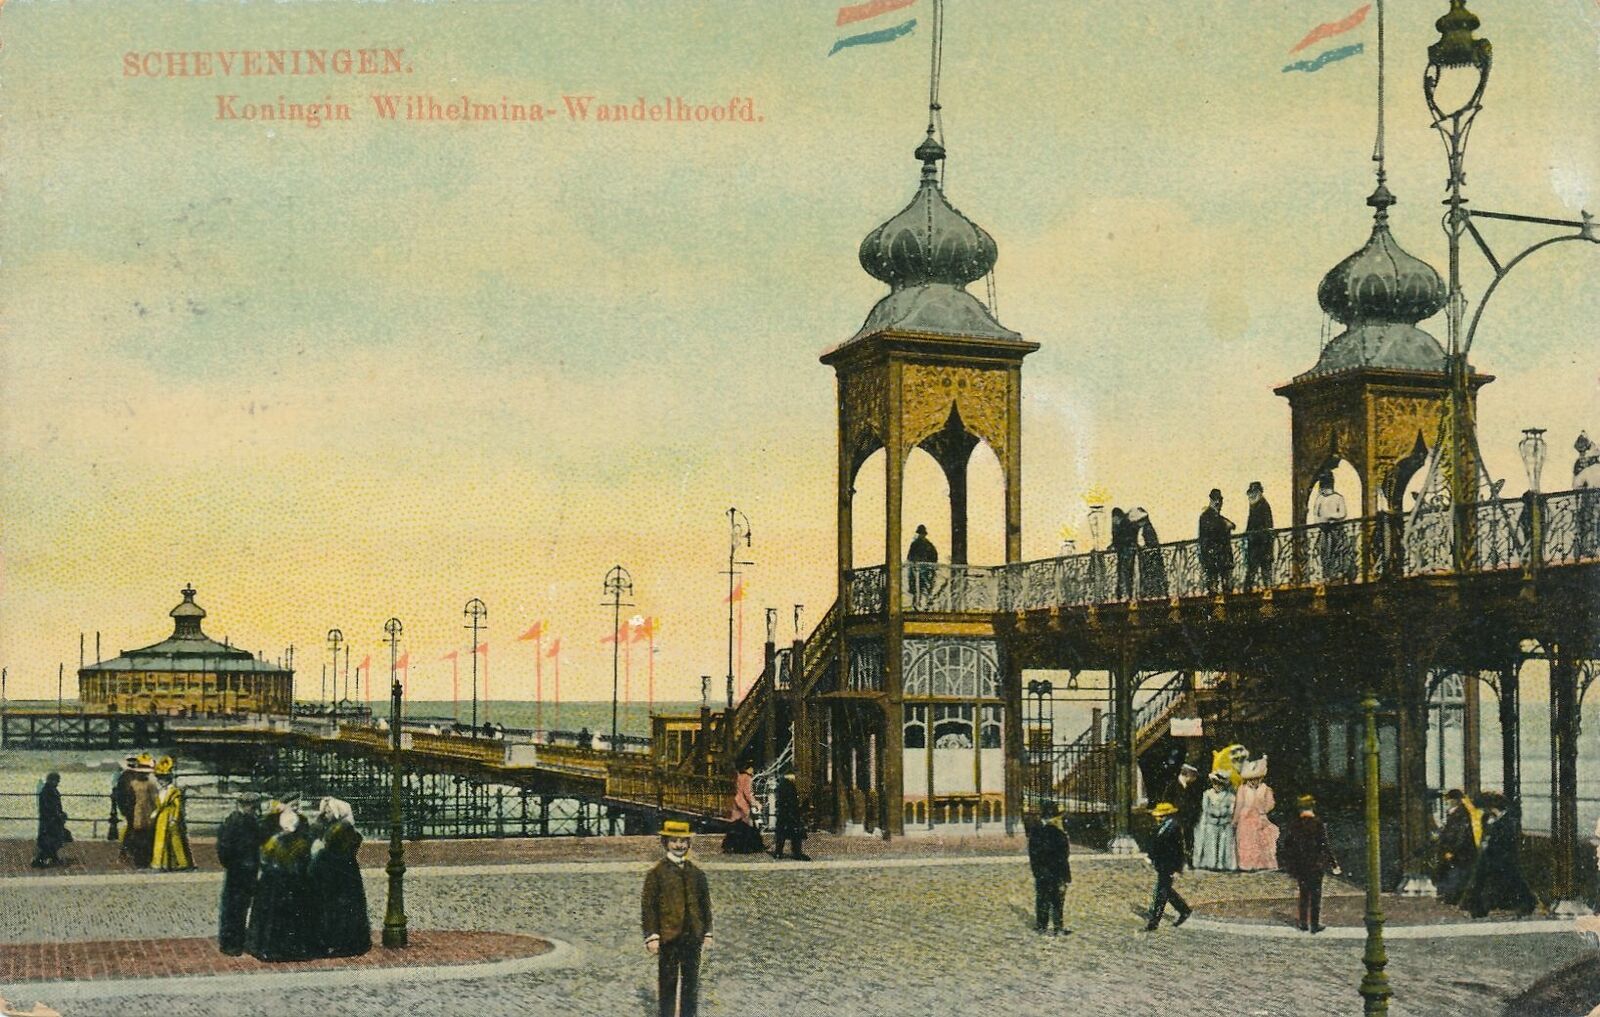 SCHEVENINGEN - Kiningin Wilhelmina-Wandelhoofd - The Hague - Netherlands 1911